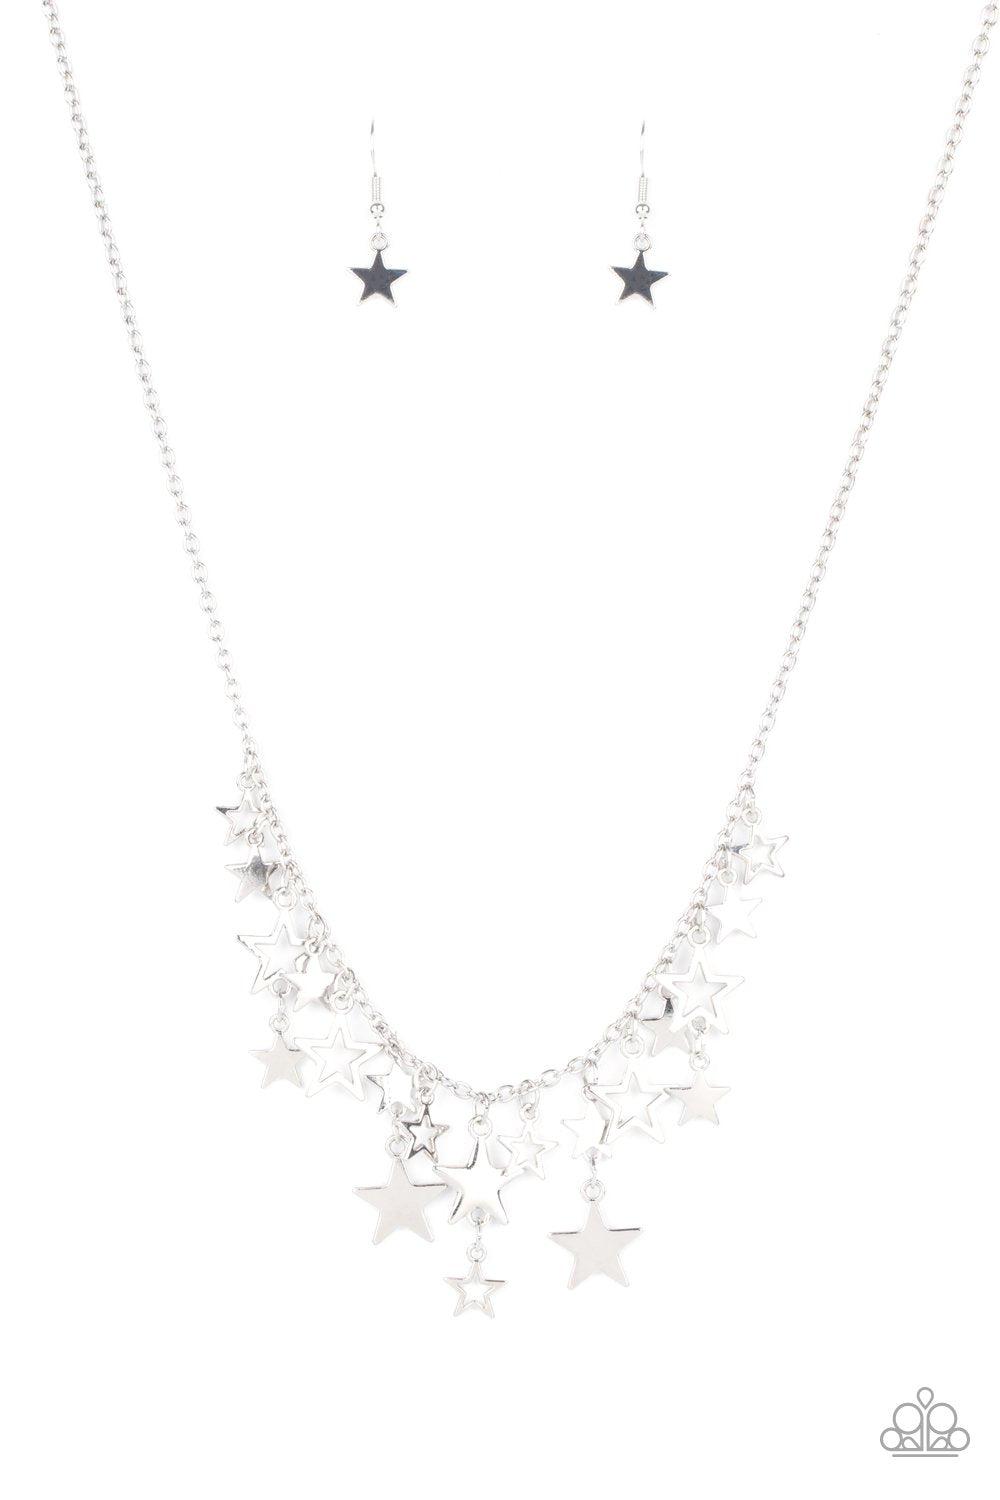 Stellar Stardom Silver Star Necklace - Paparazzi Accessories- lightbox - CarasShop.com - $5 Jewelry by Cara Jewels